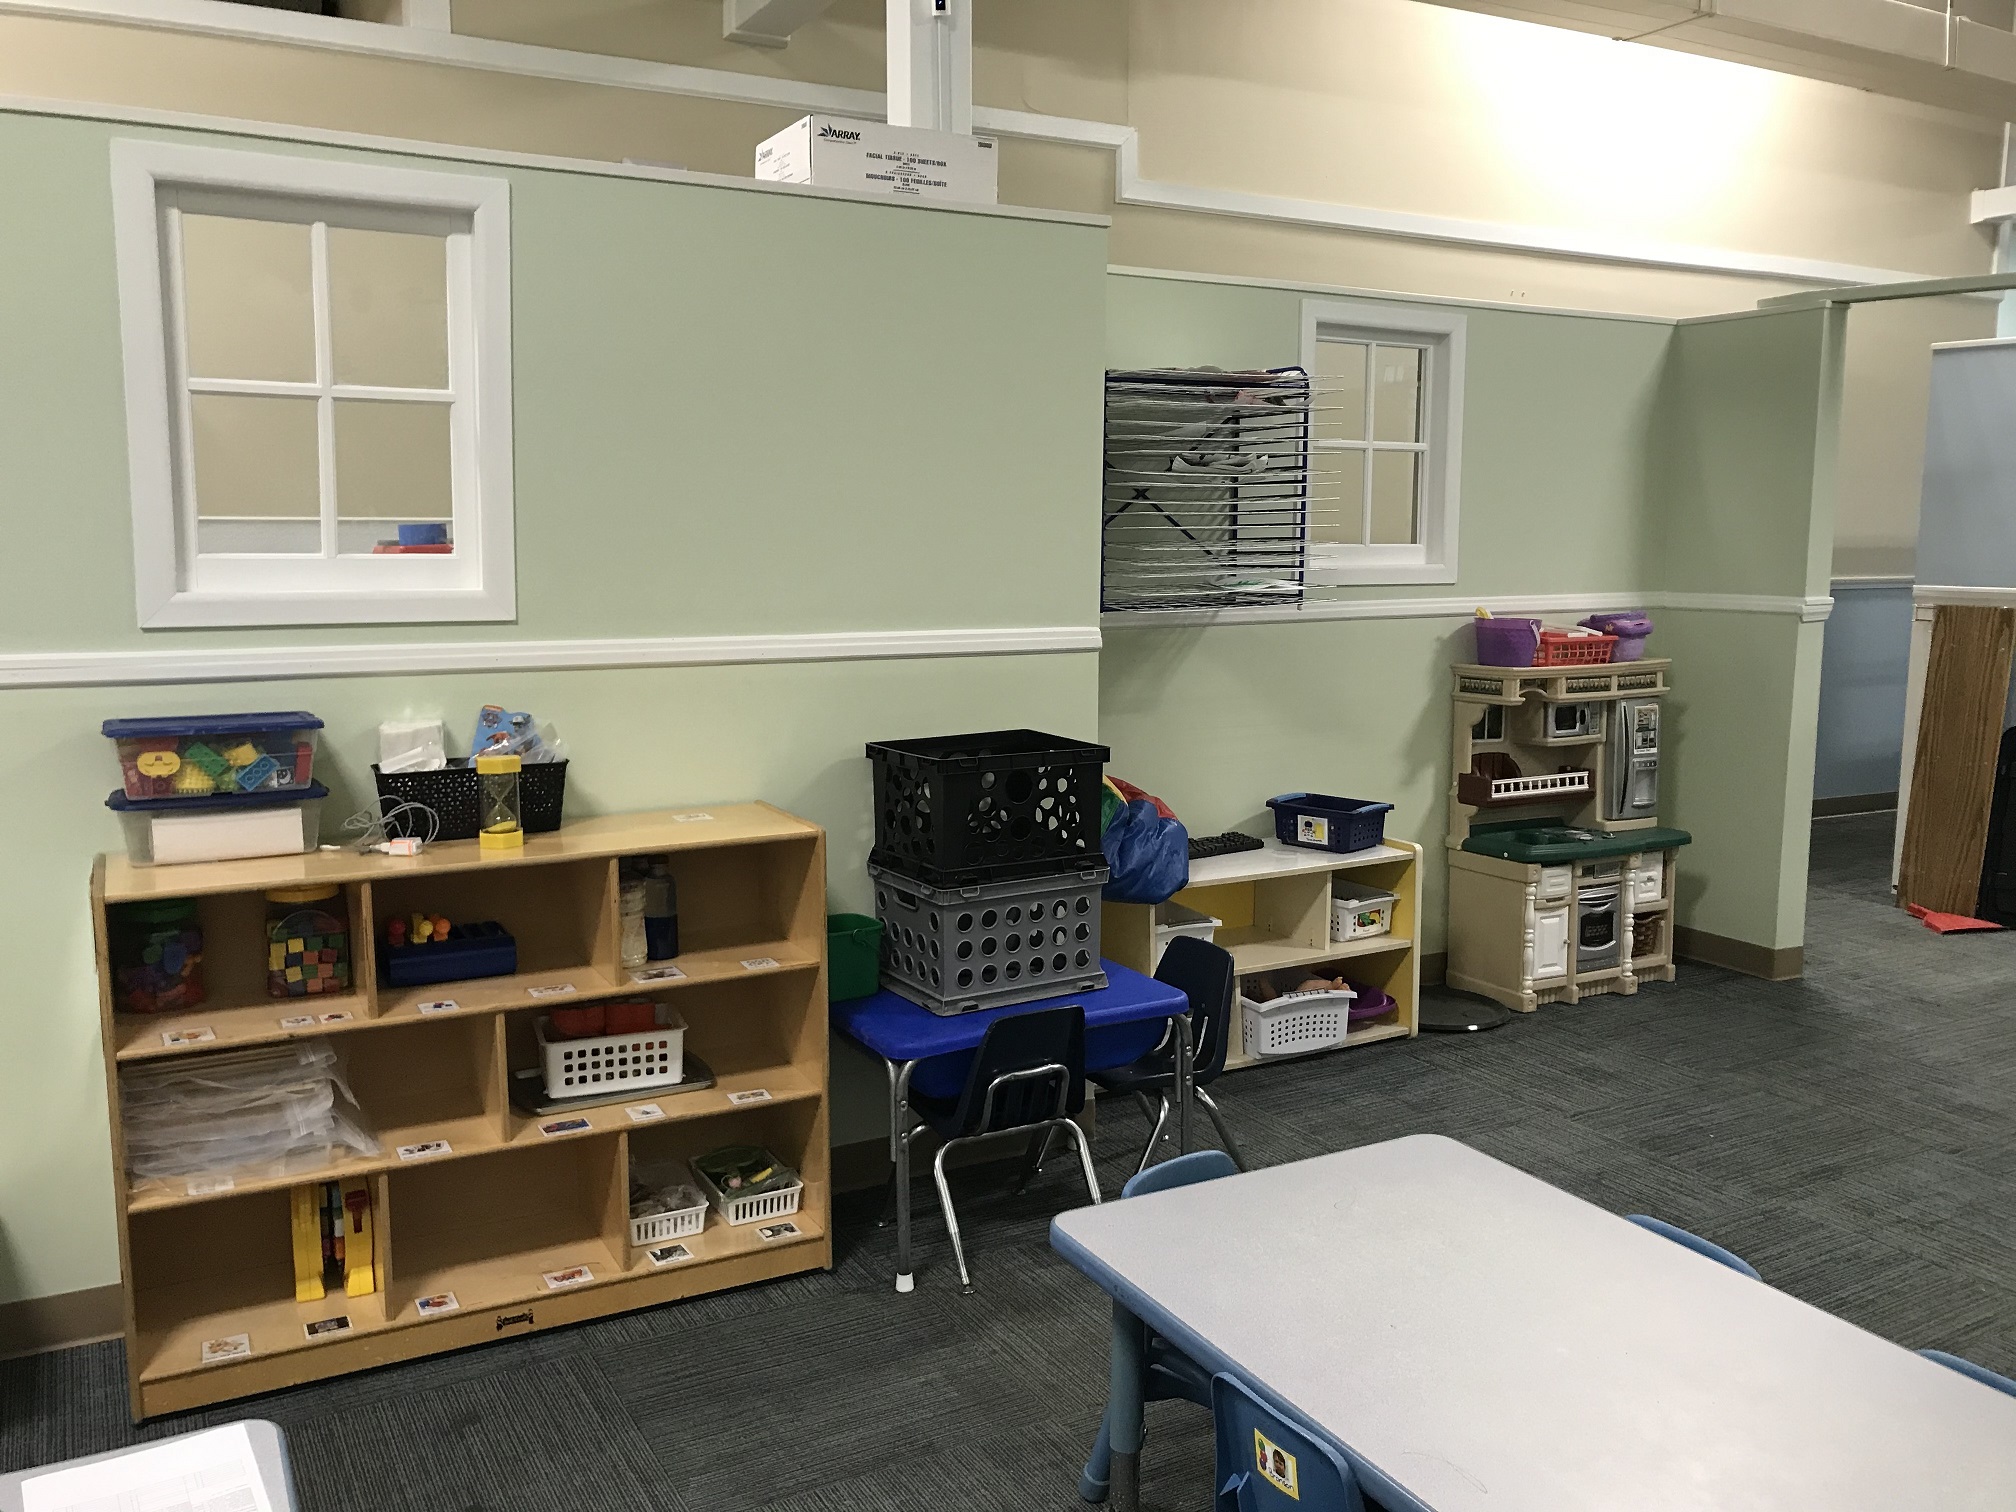 daycare classroom pic 6-12-2020.jpg 2